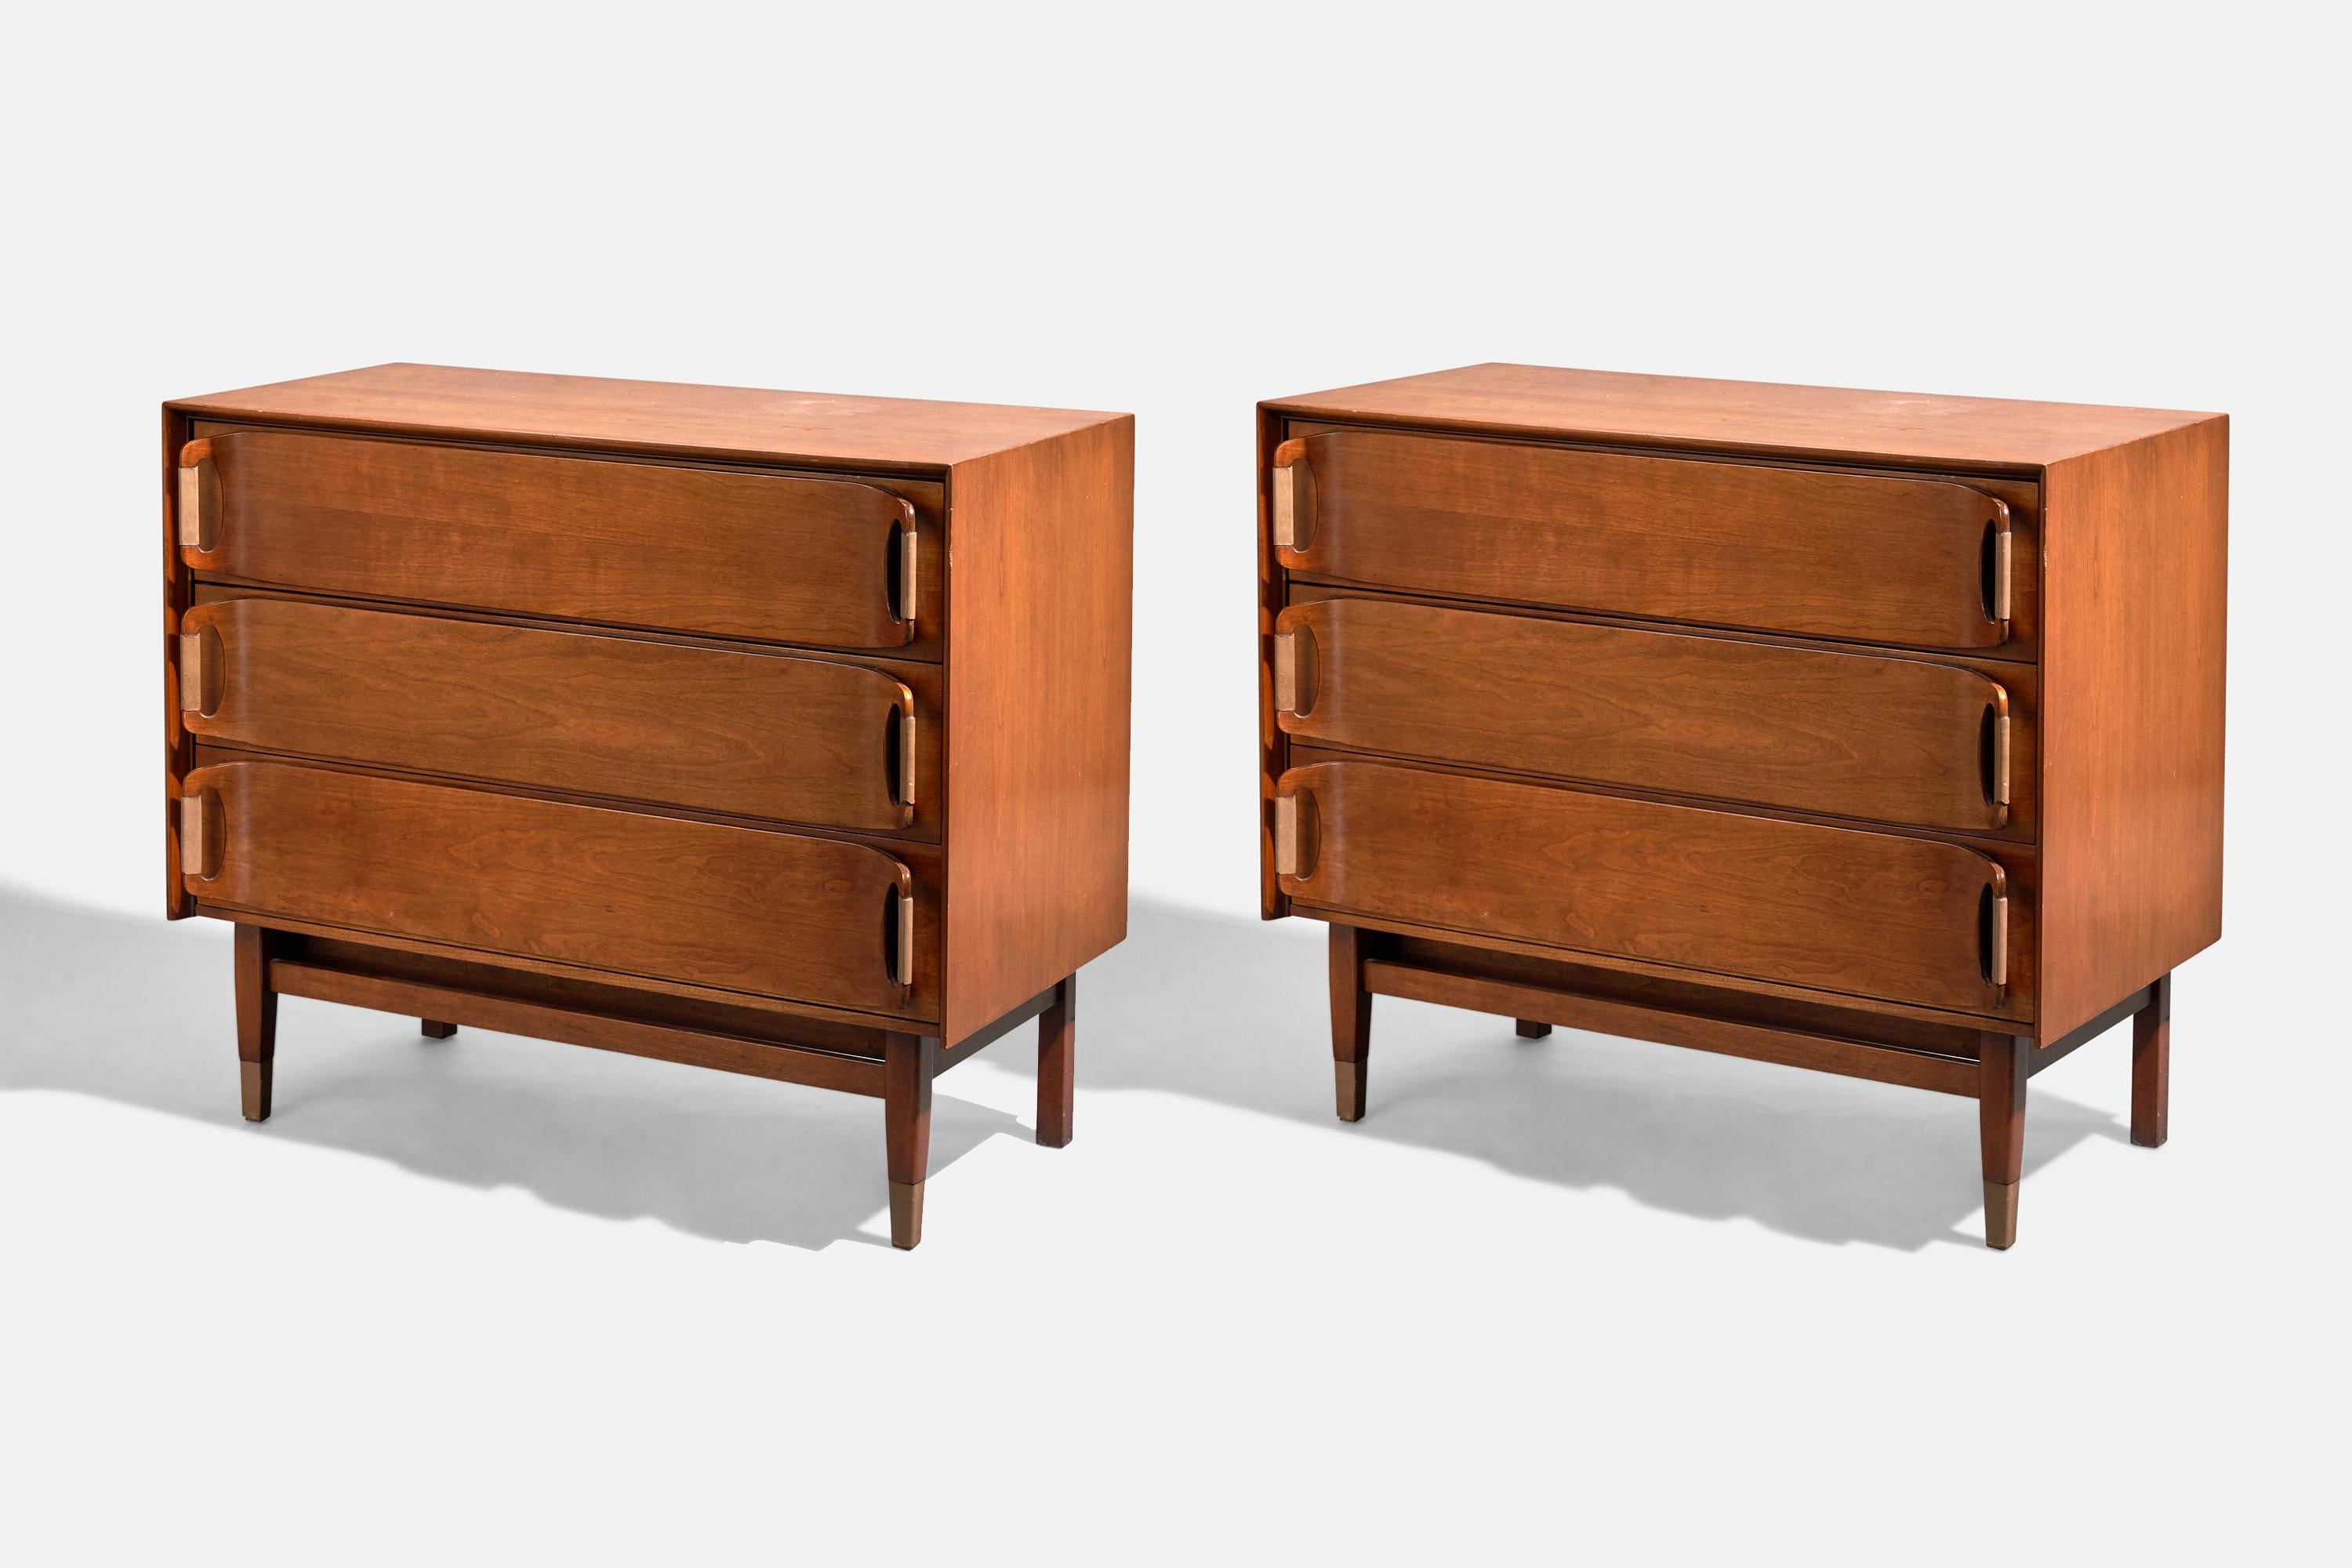 Late 20th Century Ramseur Furniture Company, Dressers, Walnut, Leather, Brass, USA, 1970s